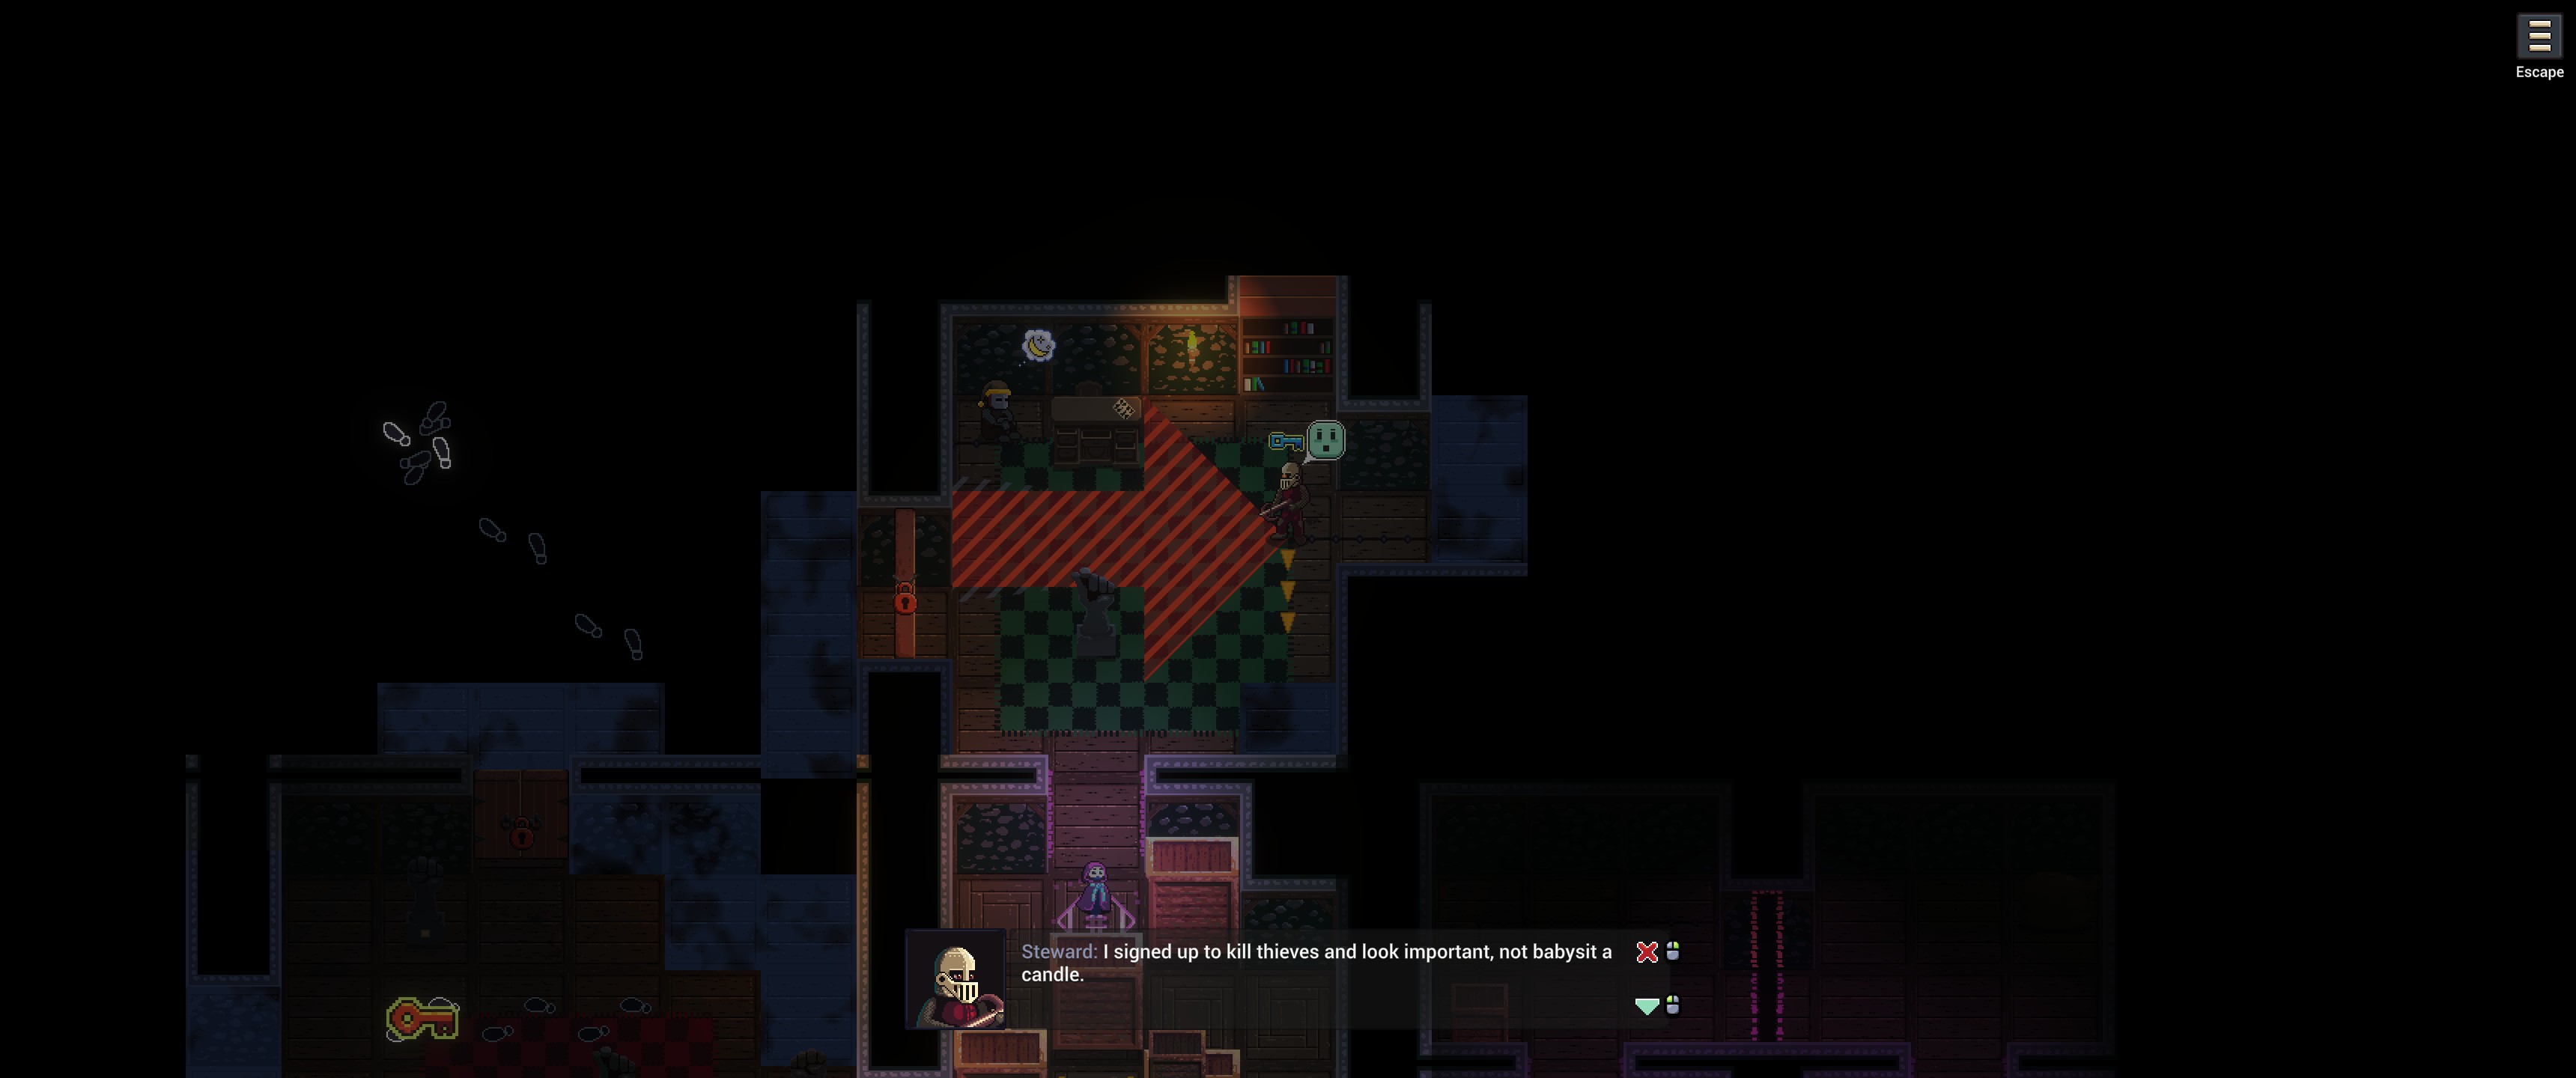 Spirited Thief, a pixel art stealth game